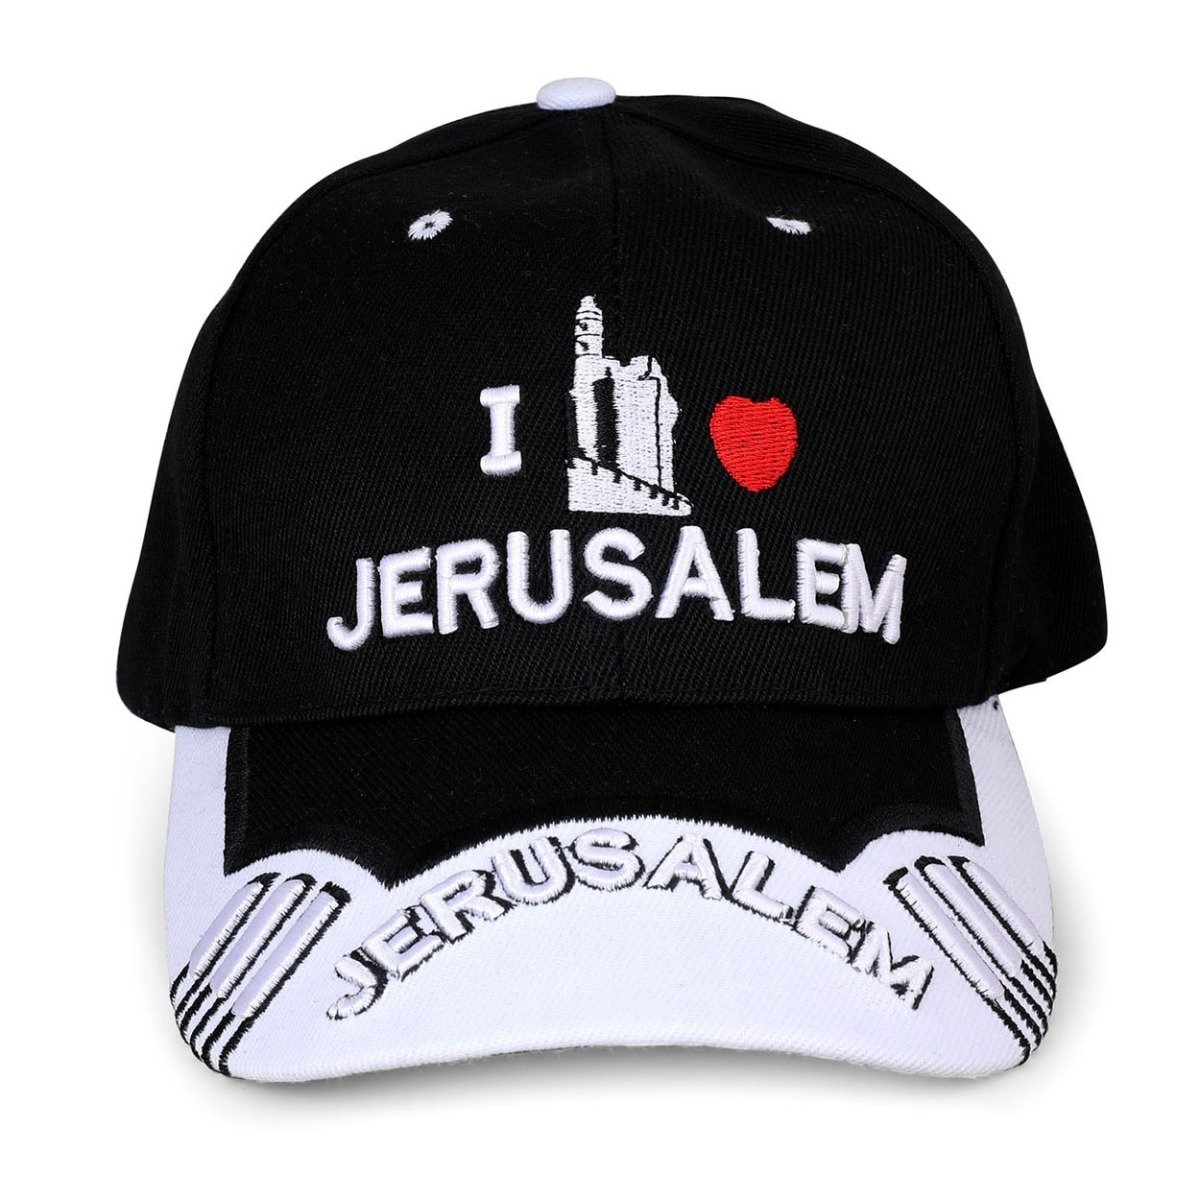 I Love Jerusalem Tower of David Baseball Cap - 1